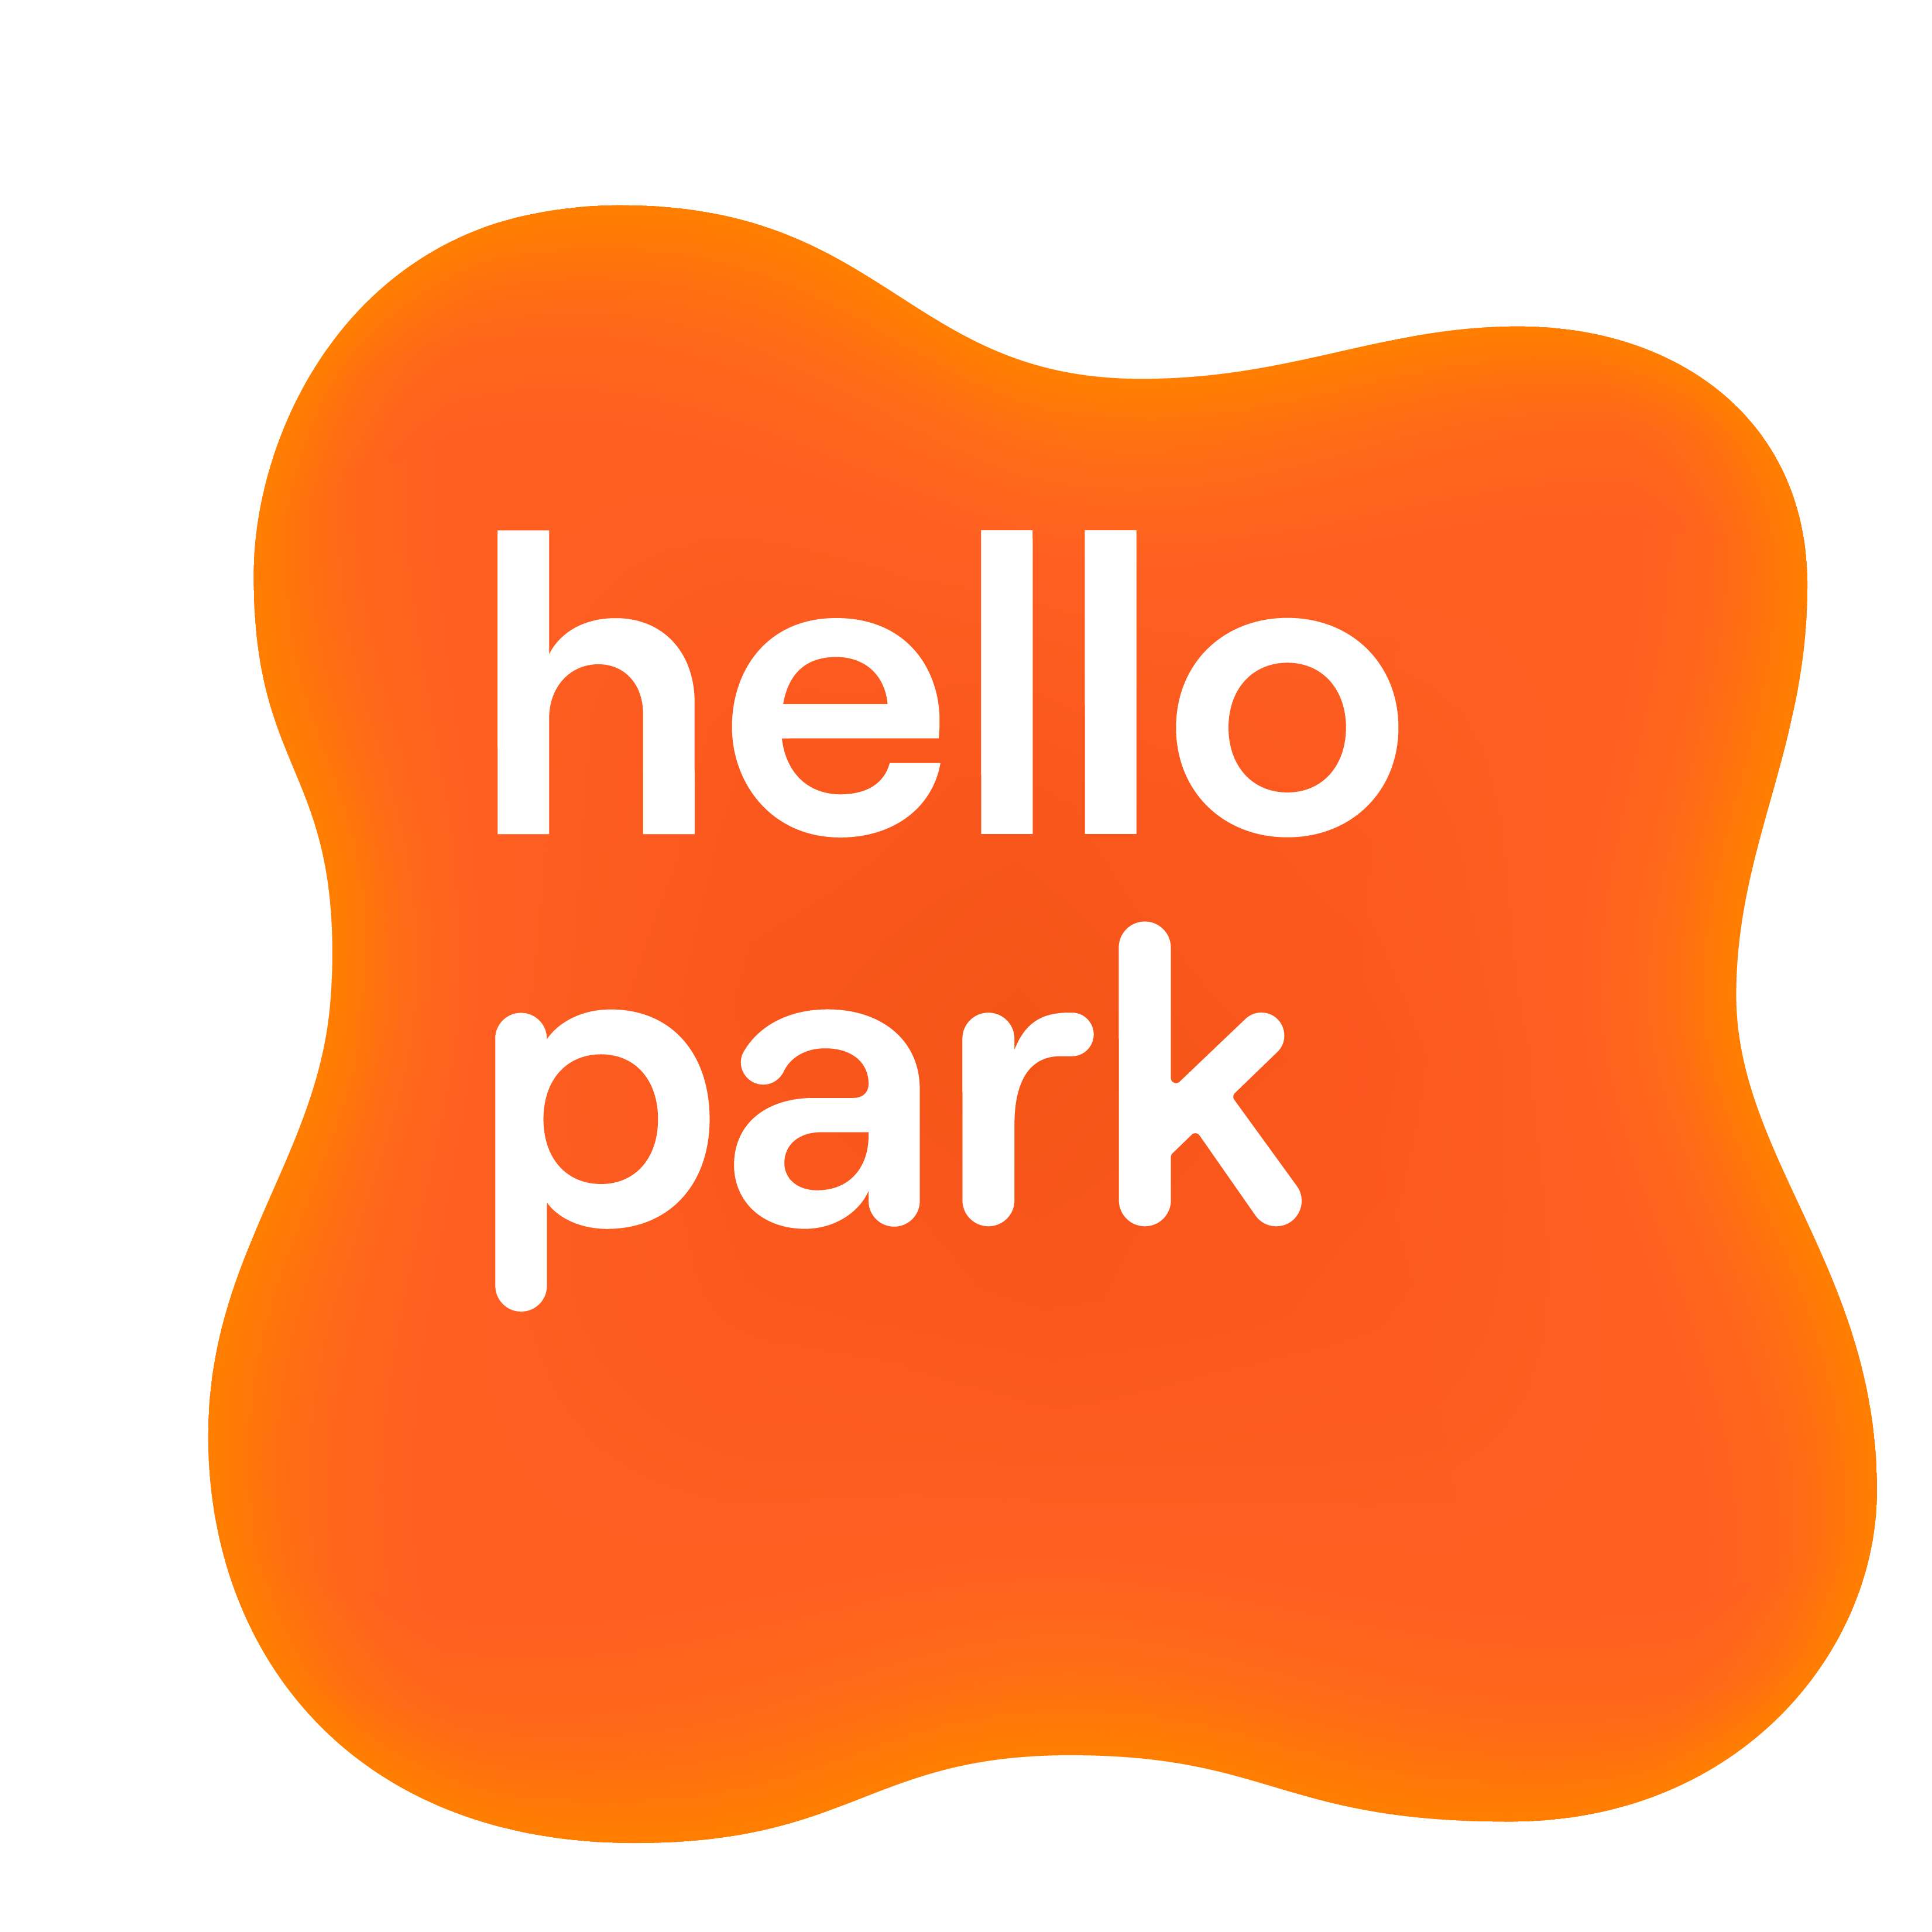 Хелло парк. Хелло парк Благовещенск. Хеллоу парк лого. Мультимедийный hello Park.